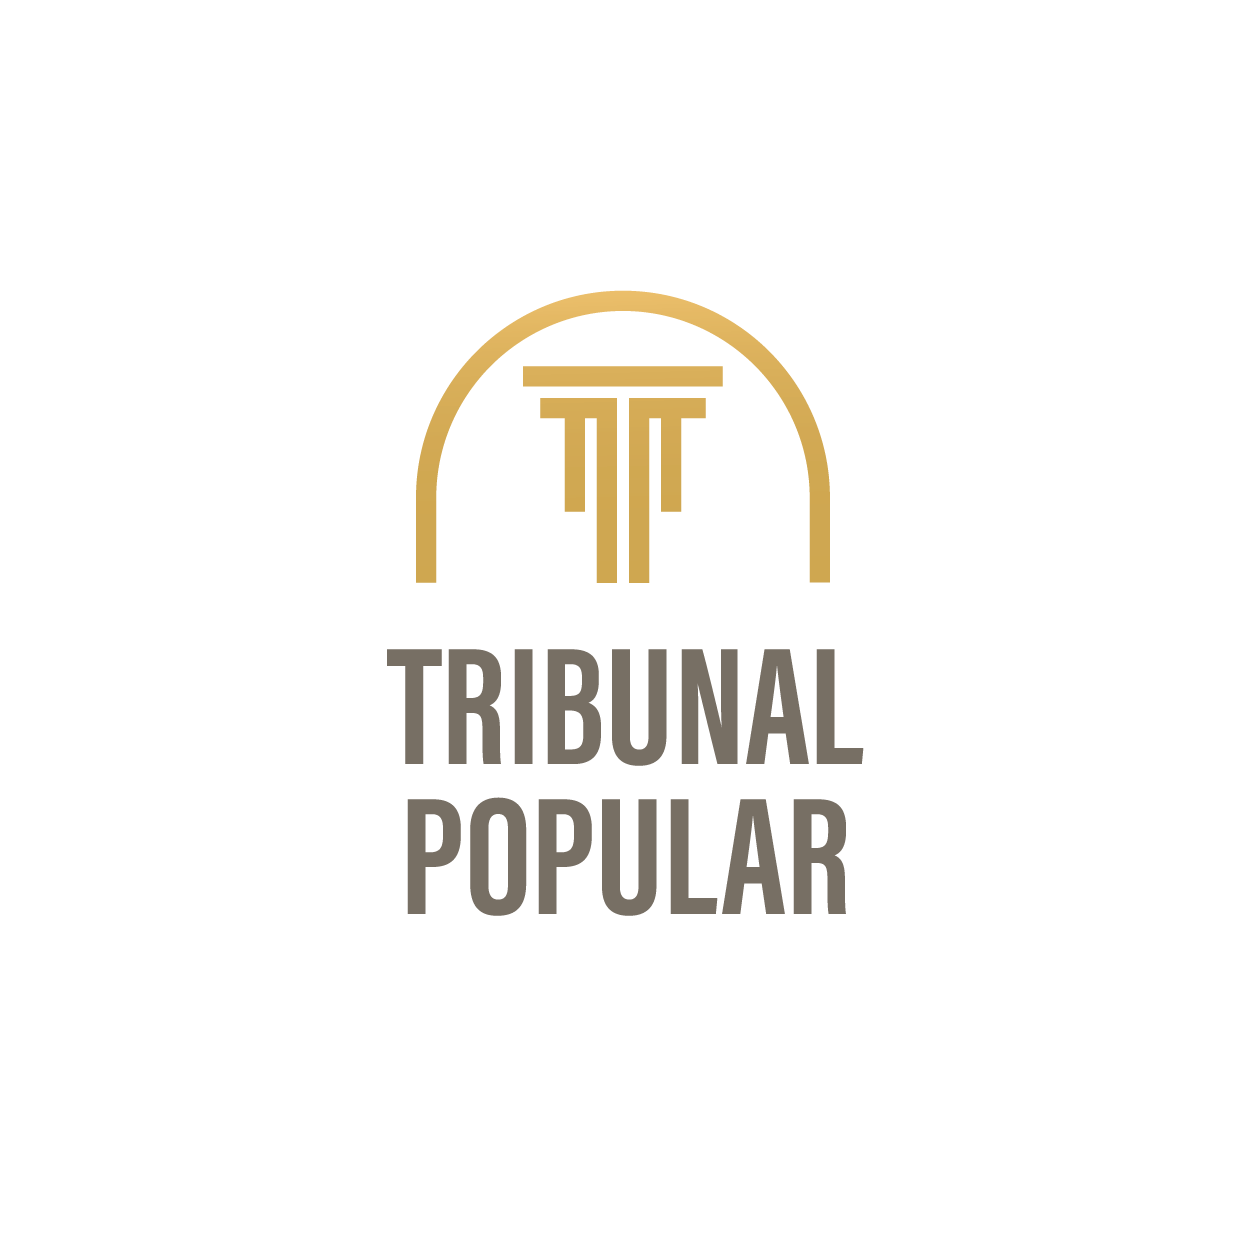 TRIBUNAL POPULAR